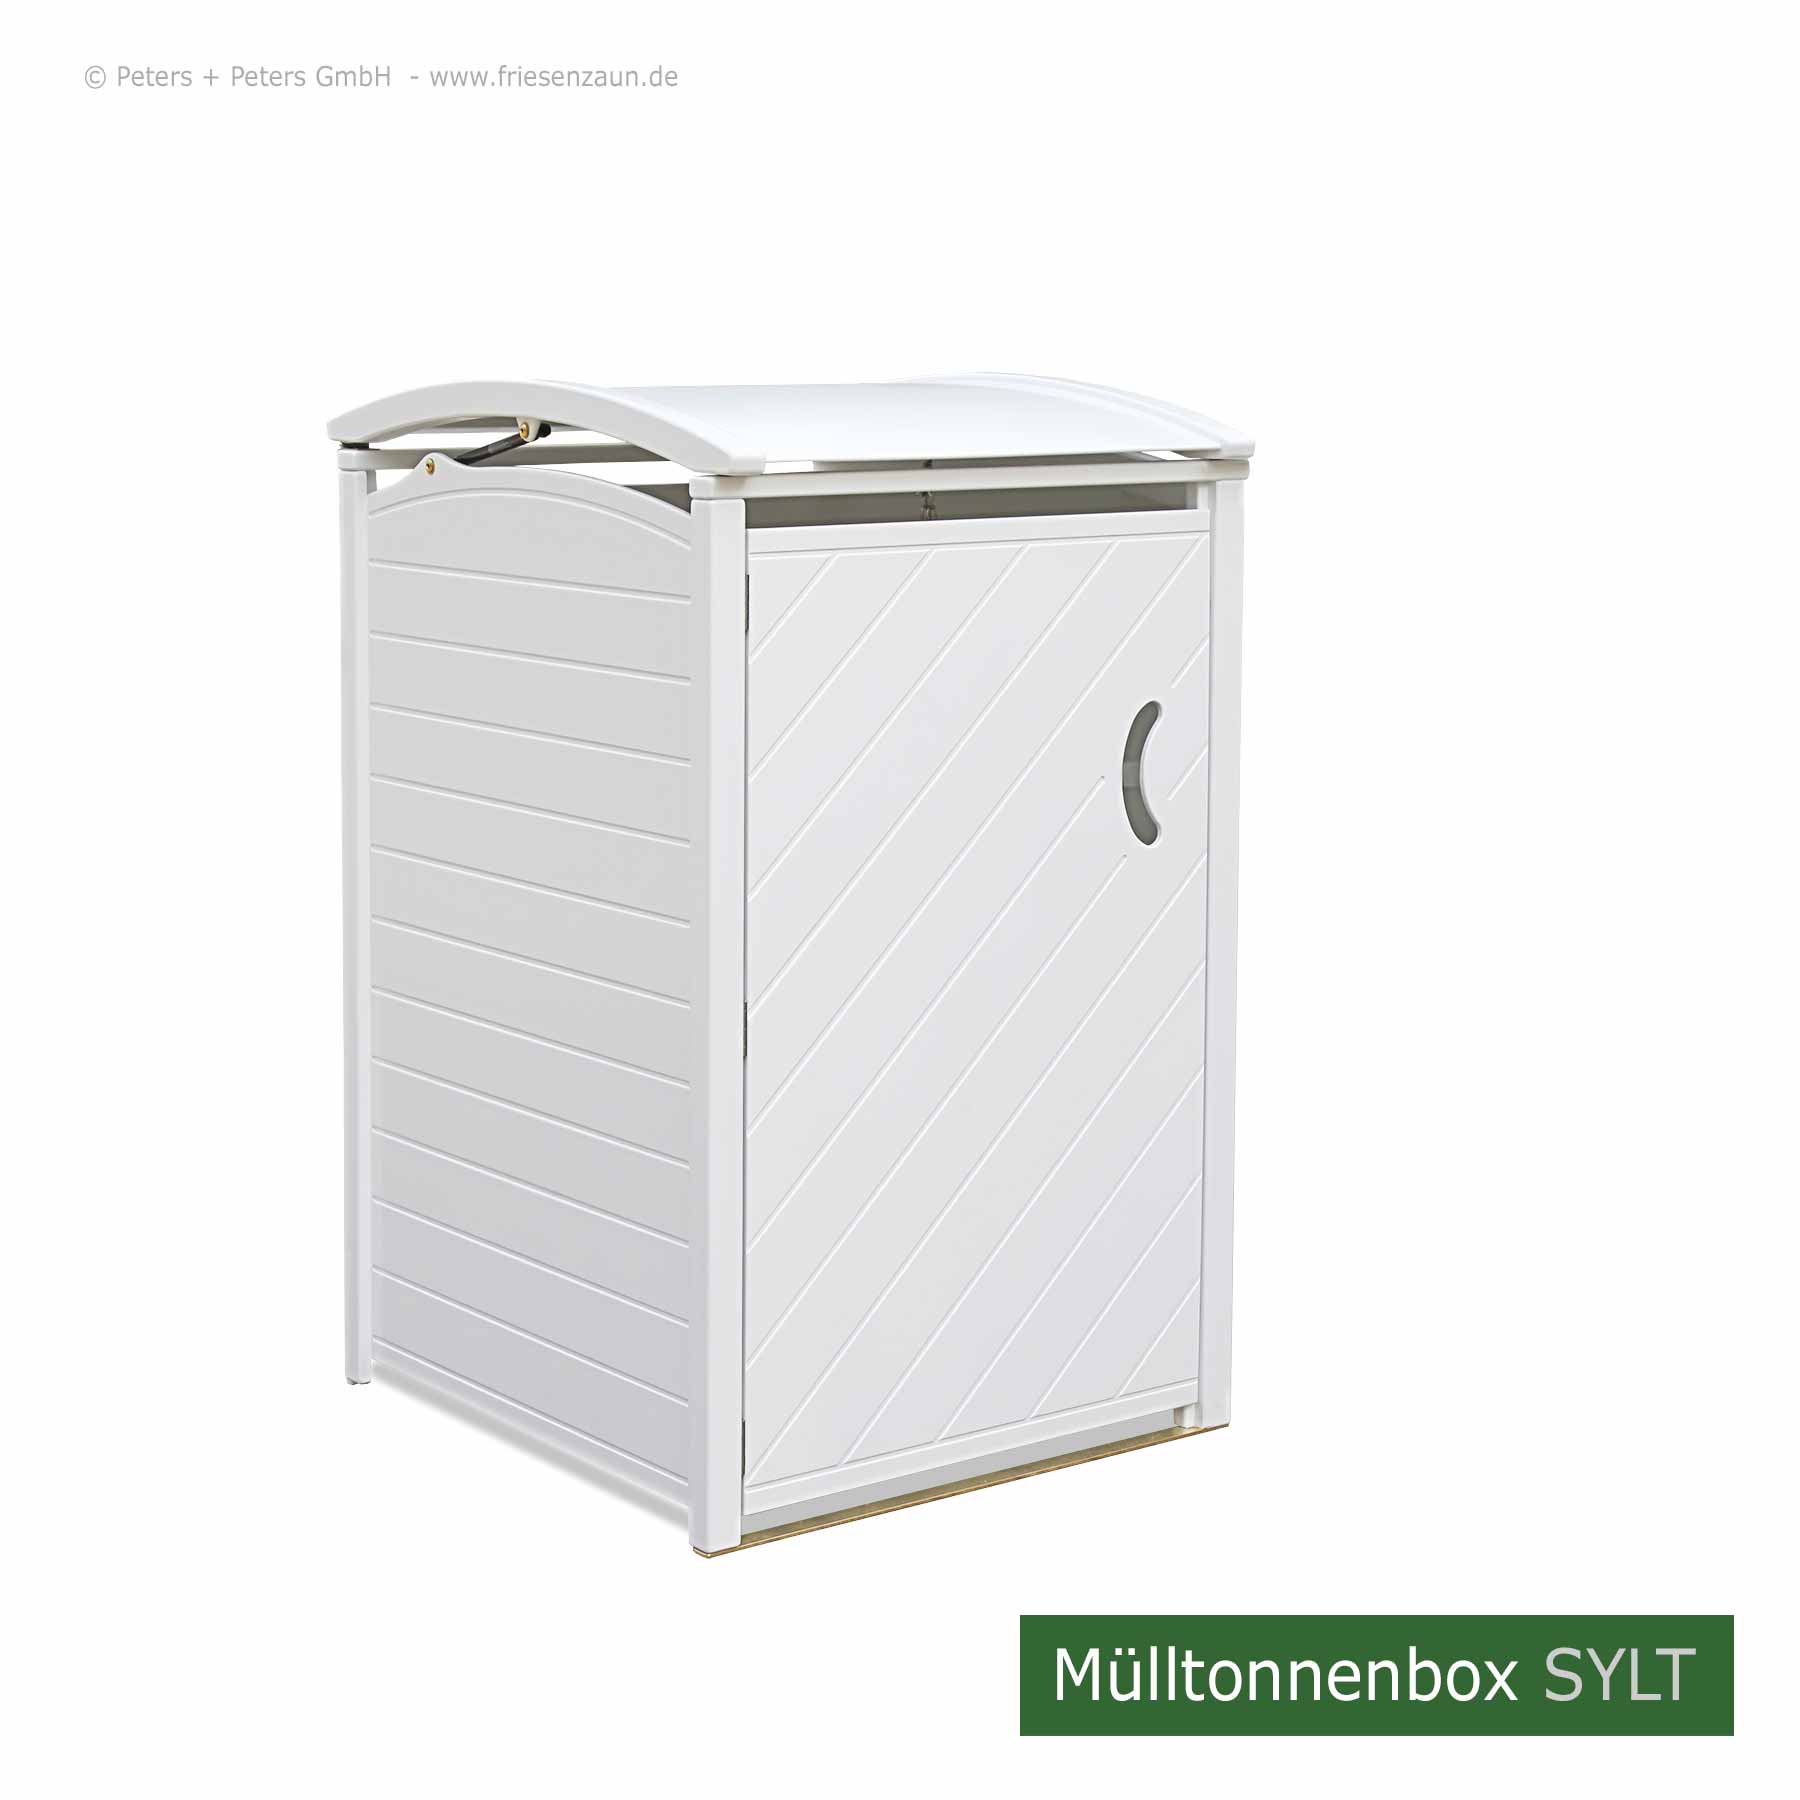 x Friesenbank-Shop Exklusive 1 oder Einzel Liter - Mülltonnenbox 240 - SYLT 120